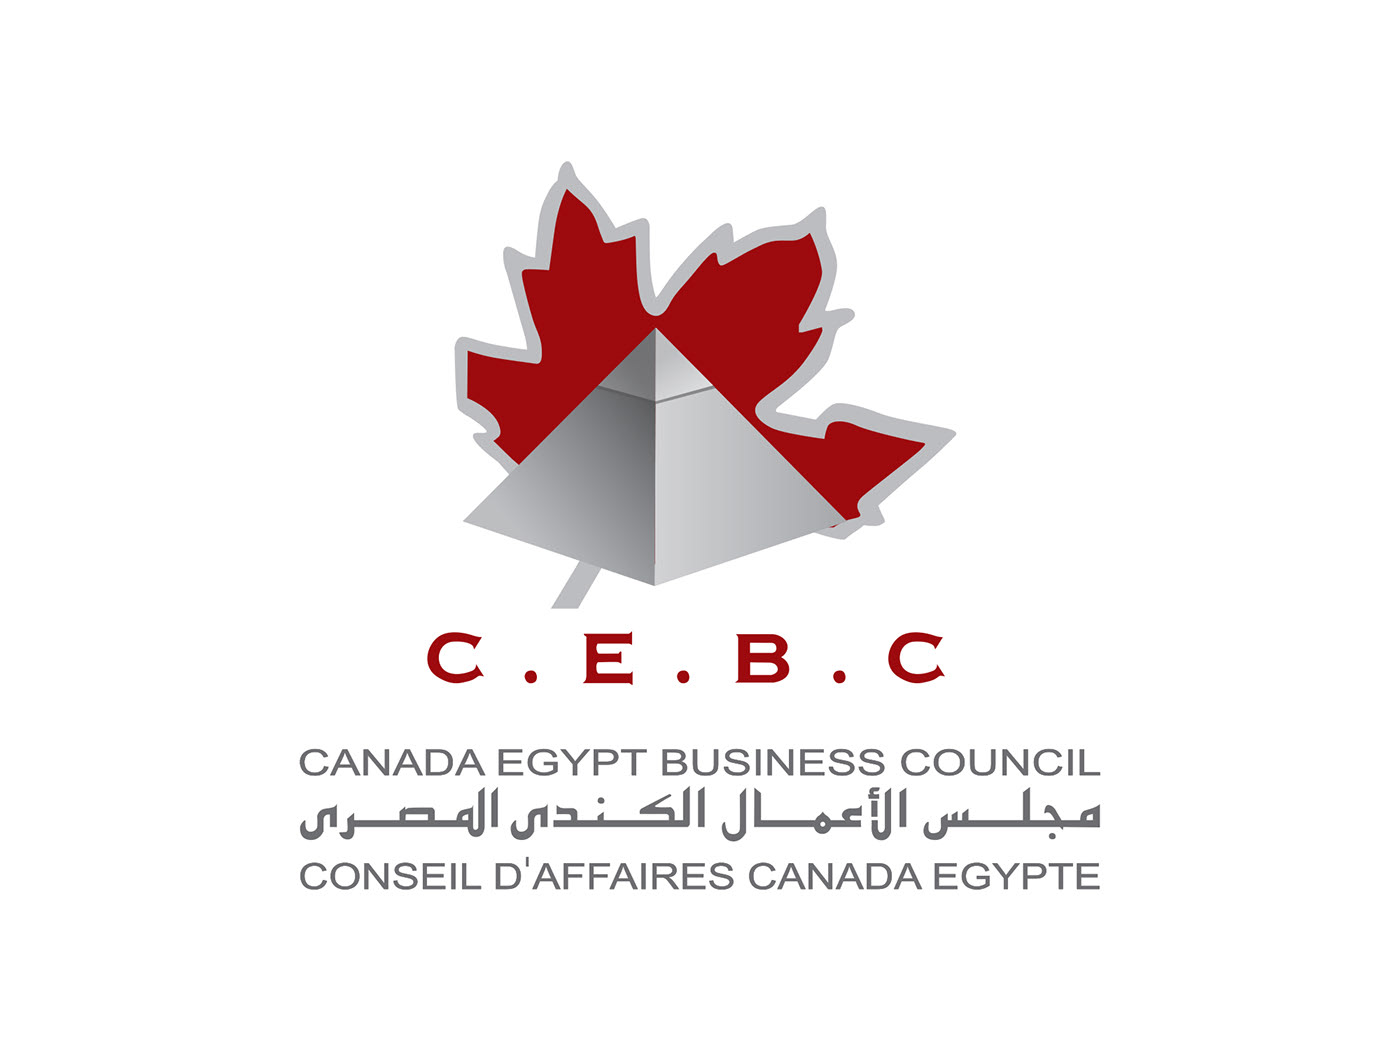 Canada Egypt Business Council